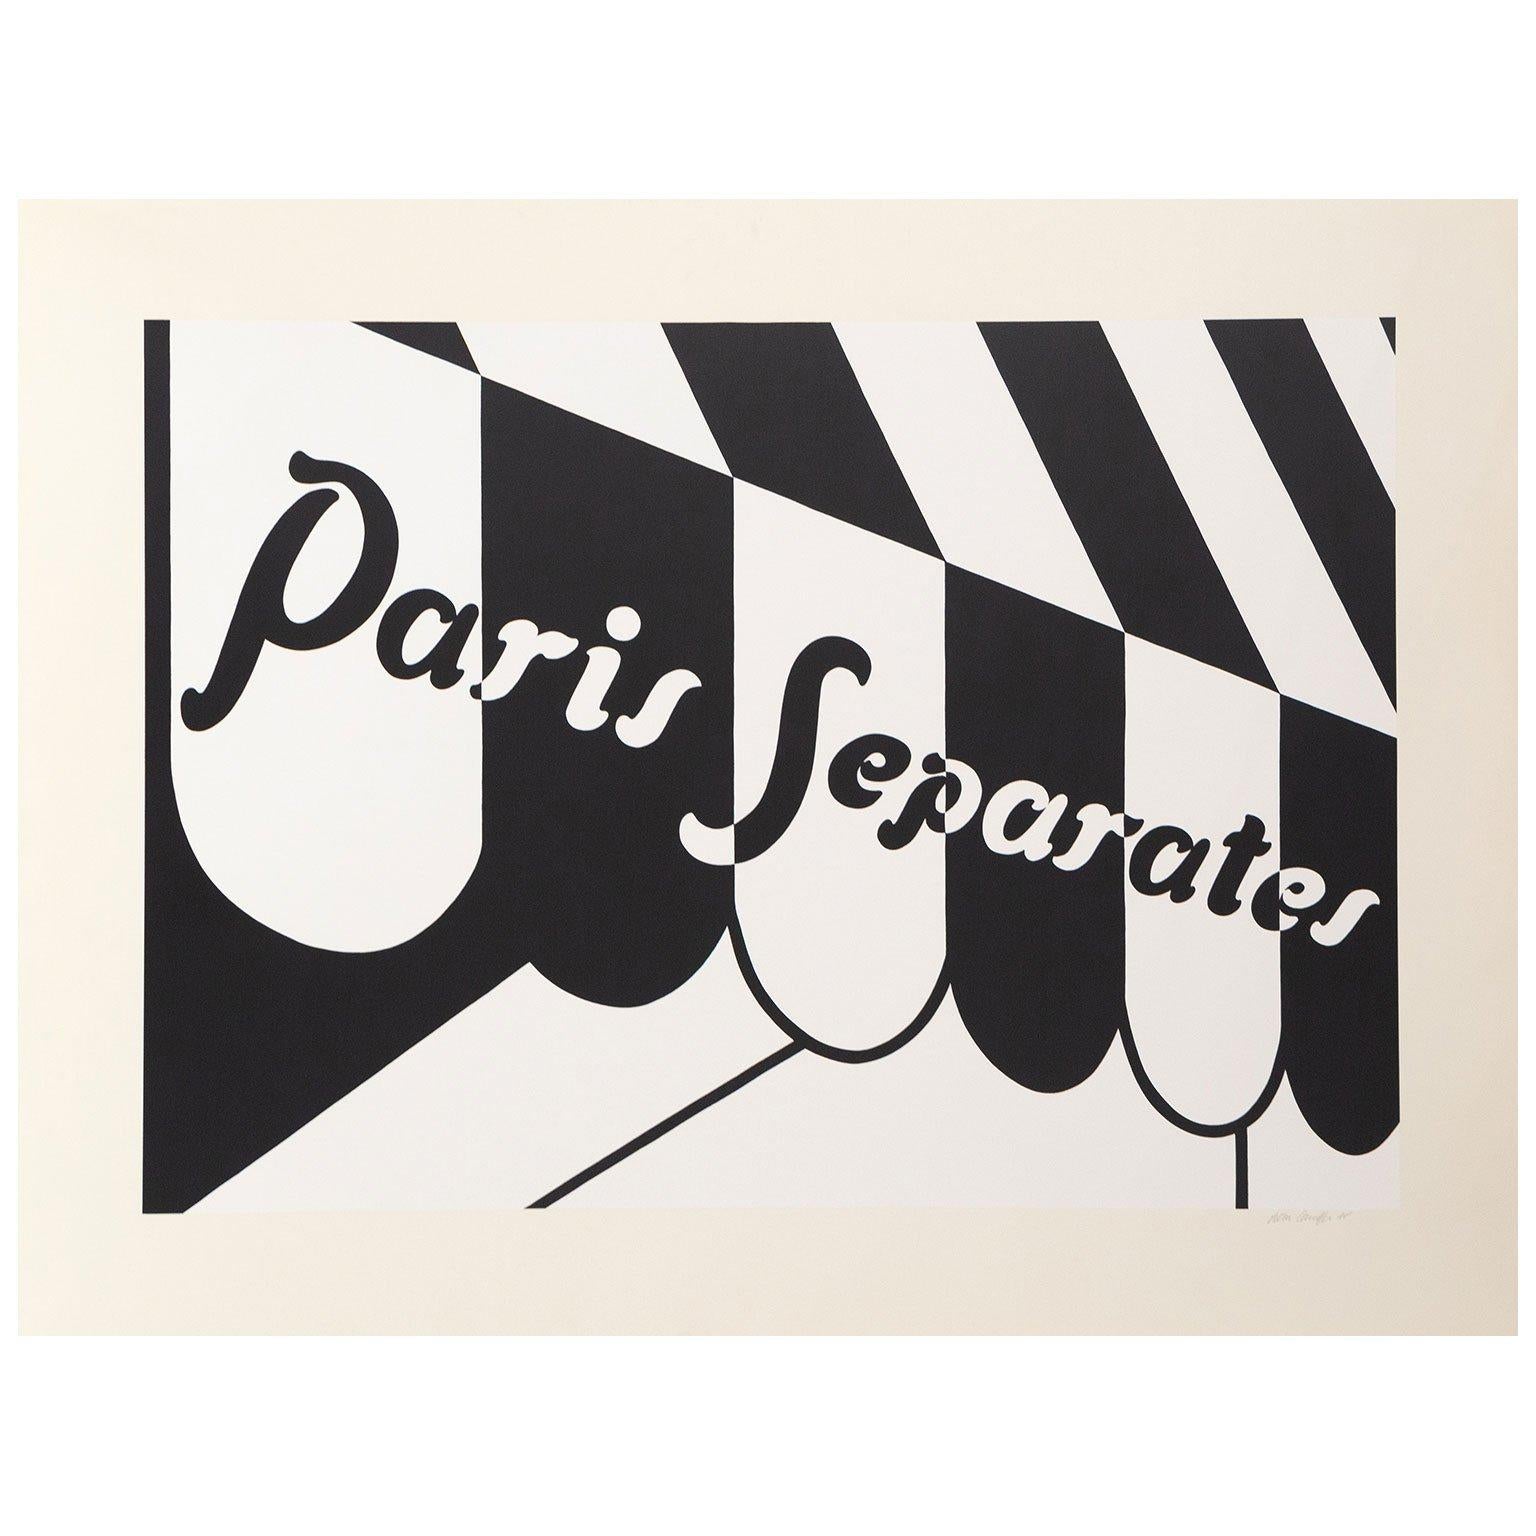 Paris Separates - Print by Patrick Caulfield